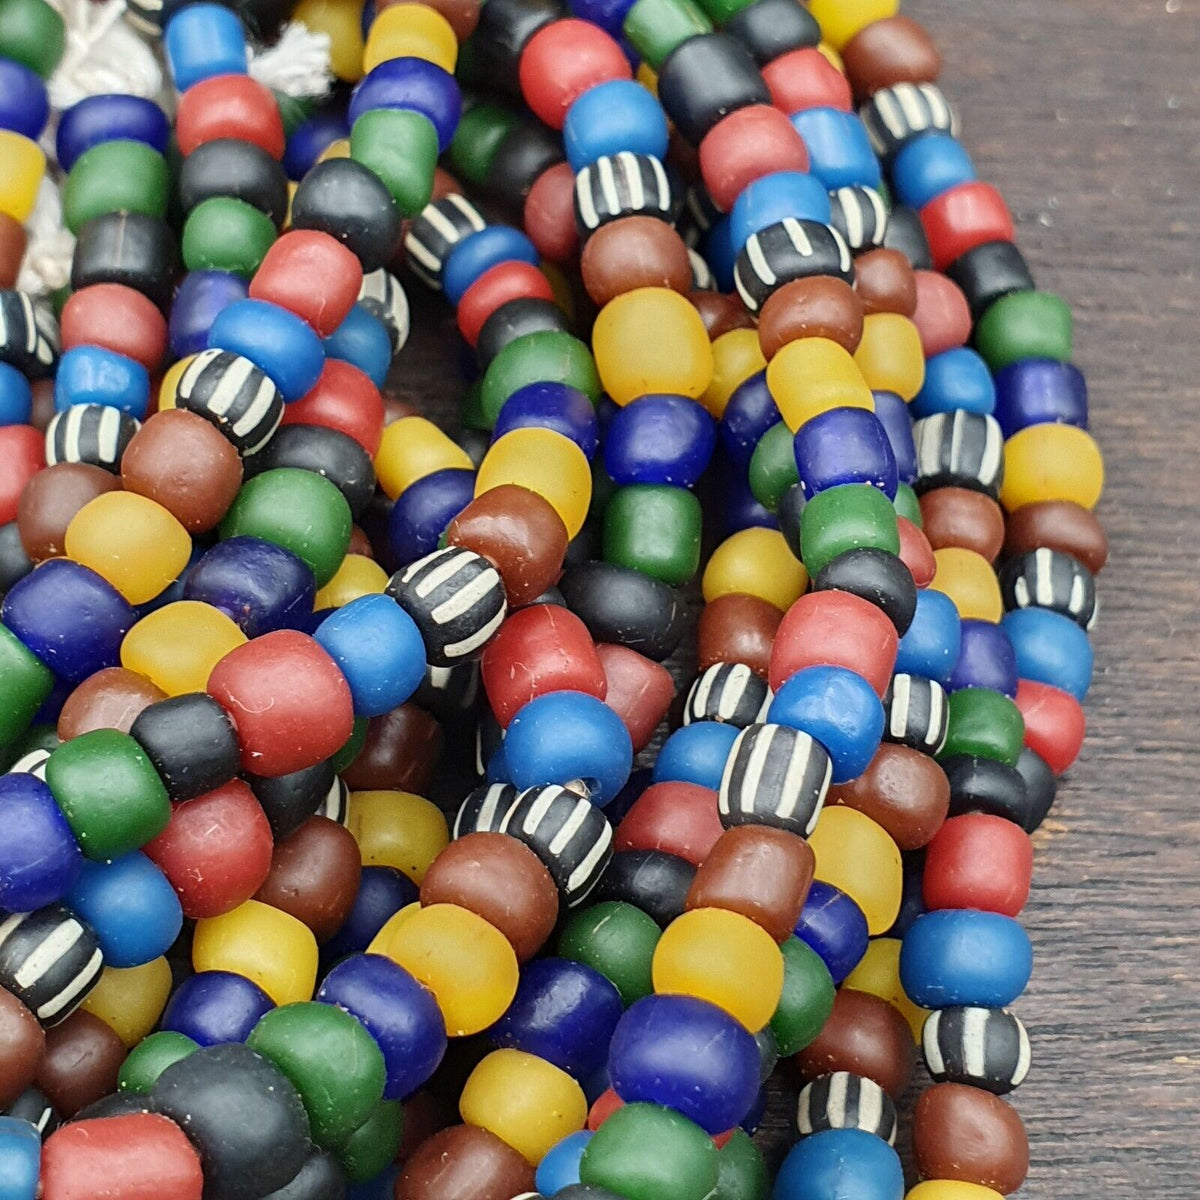 10 strands lot Vintage old mix color Glass Beads Long Necklace 5.5-6.5 mm